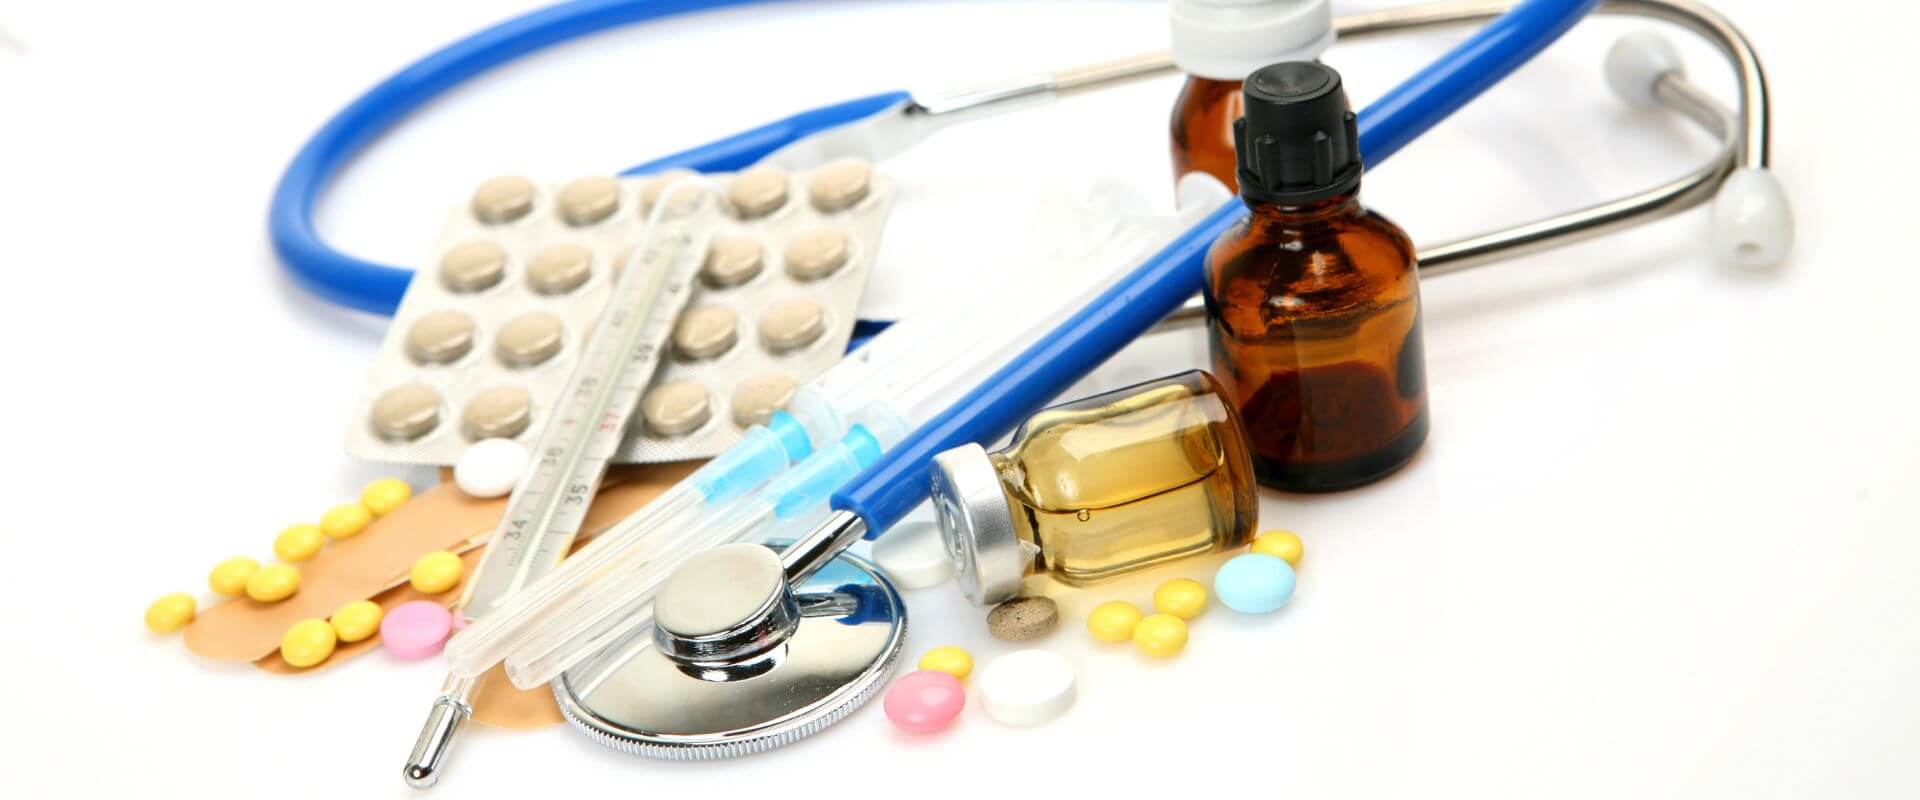 Part D medications after enrollment - image